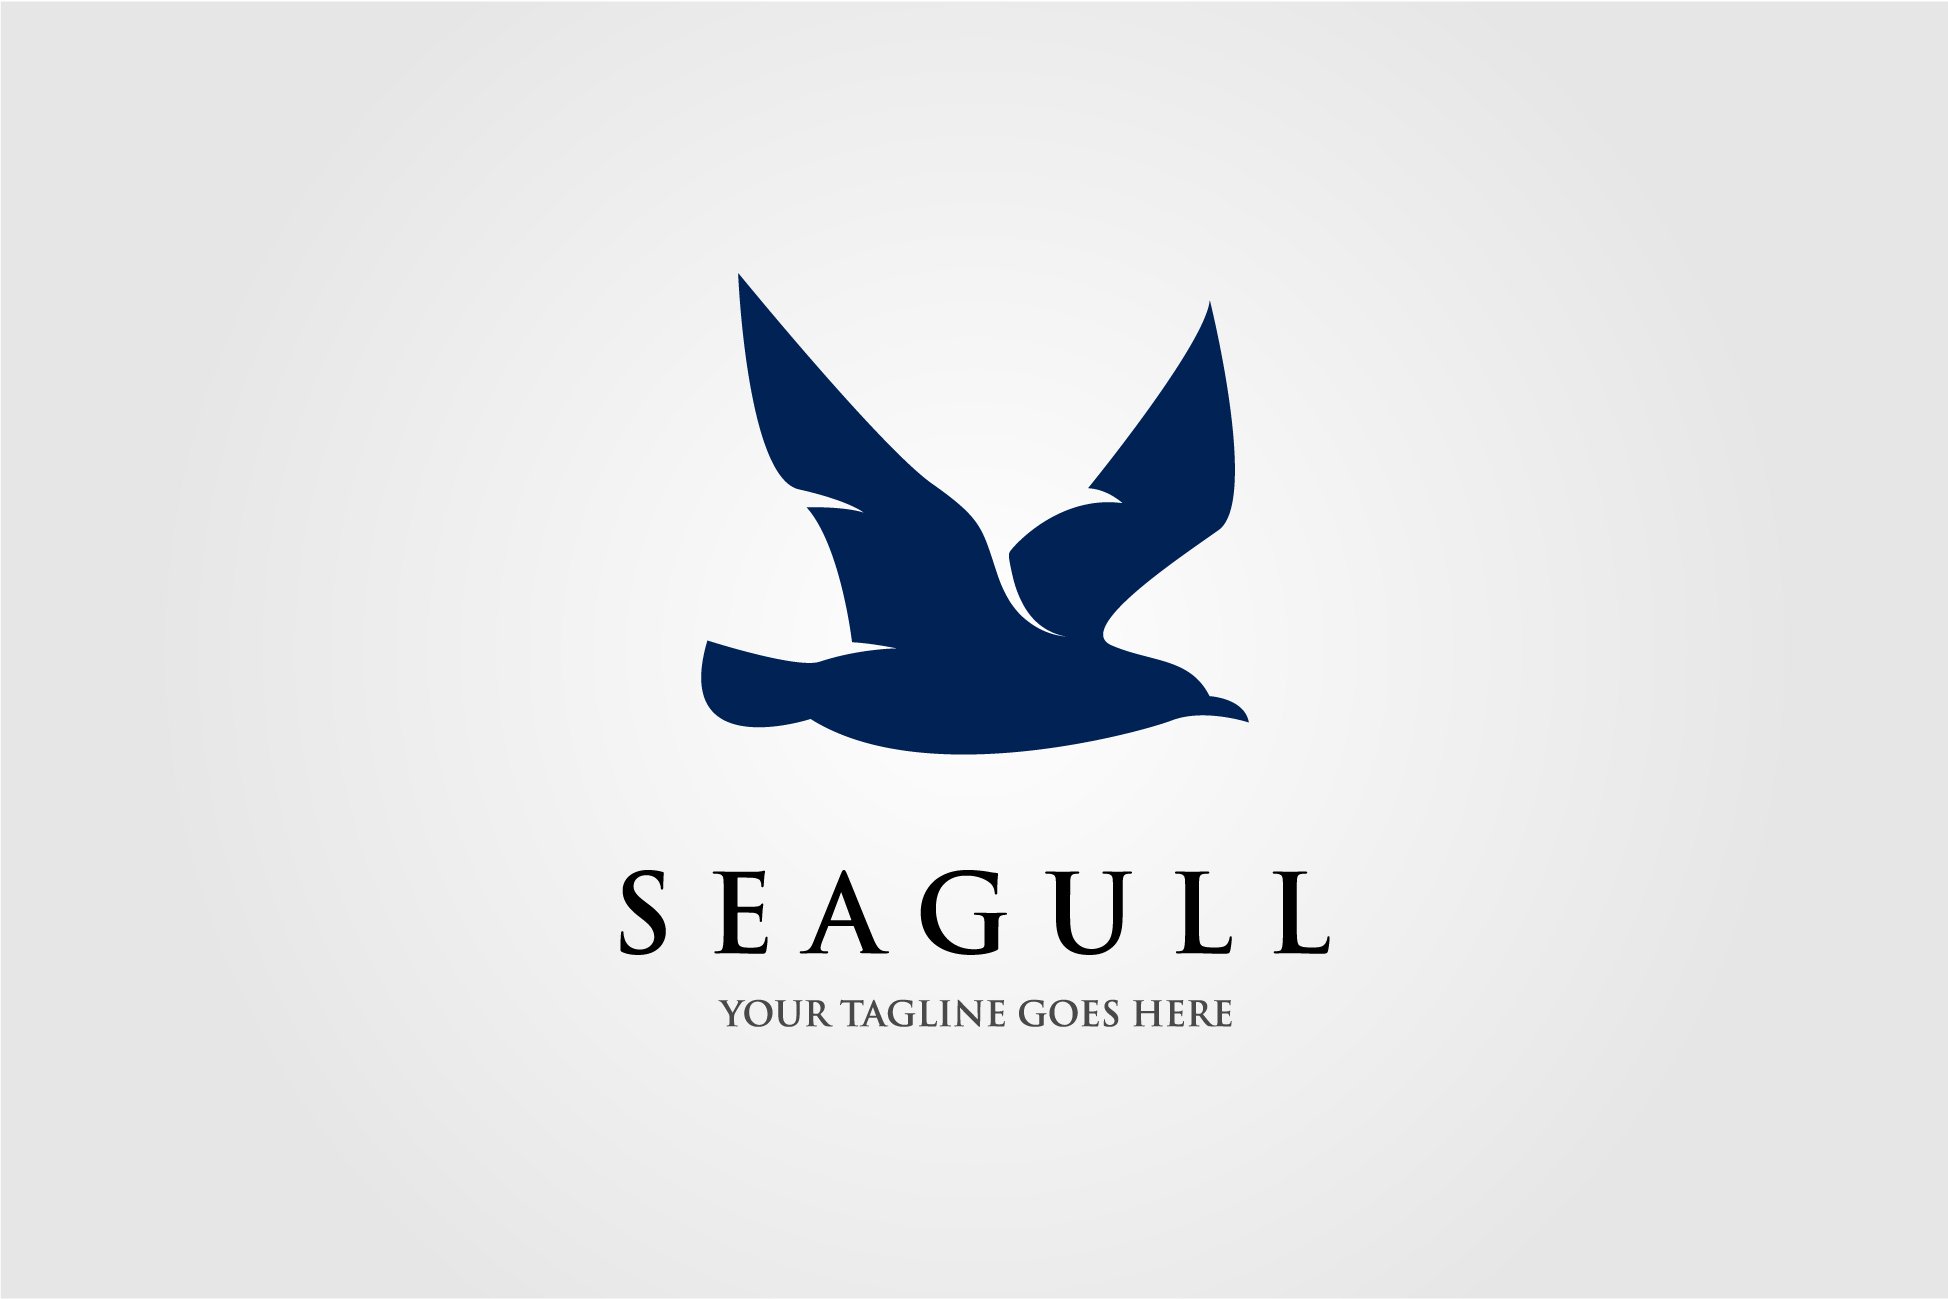 seagull logo icon designs vector cover image.